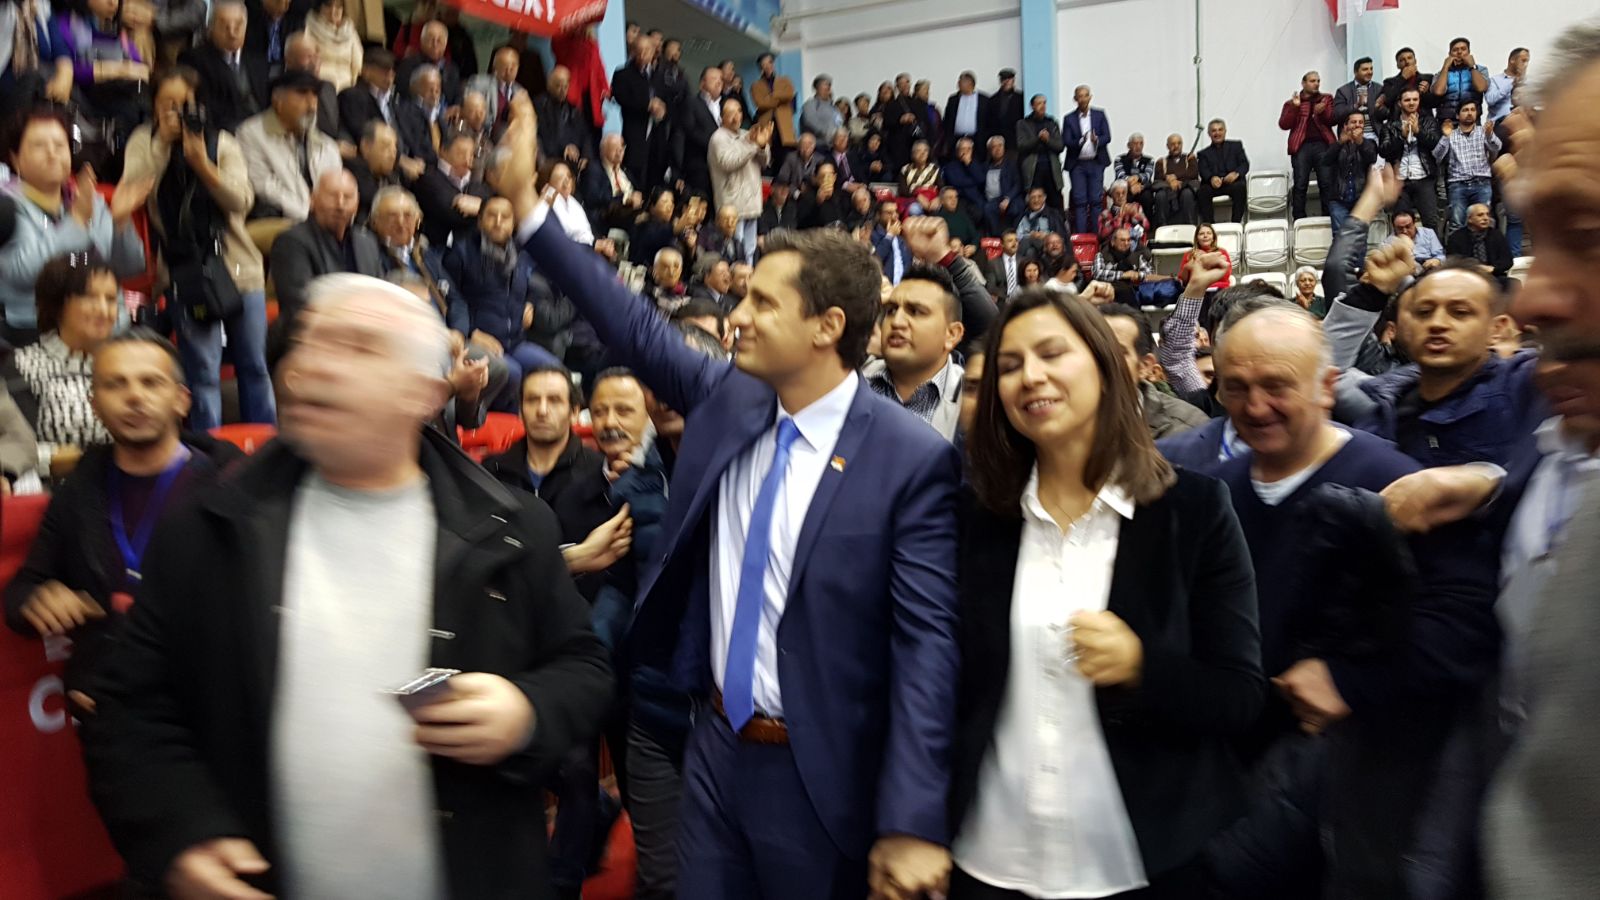 CHP İzmir İl Kongresi